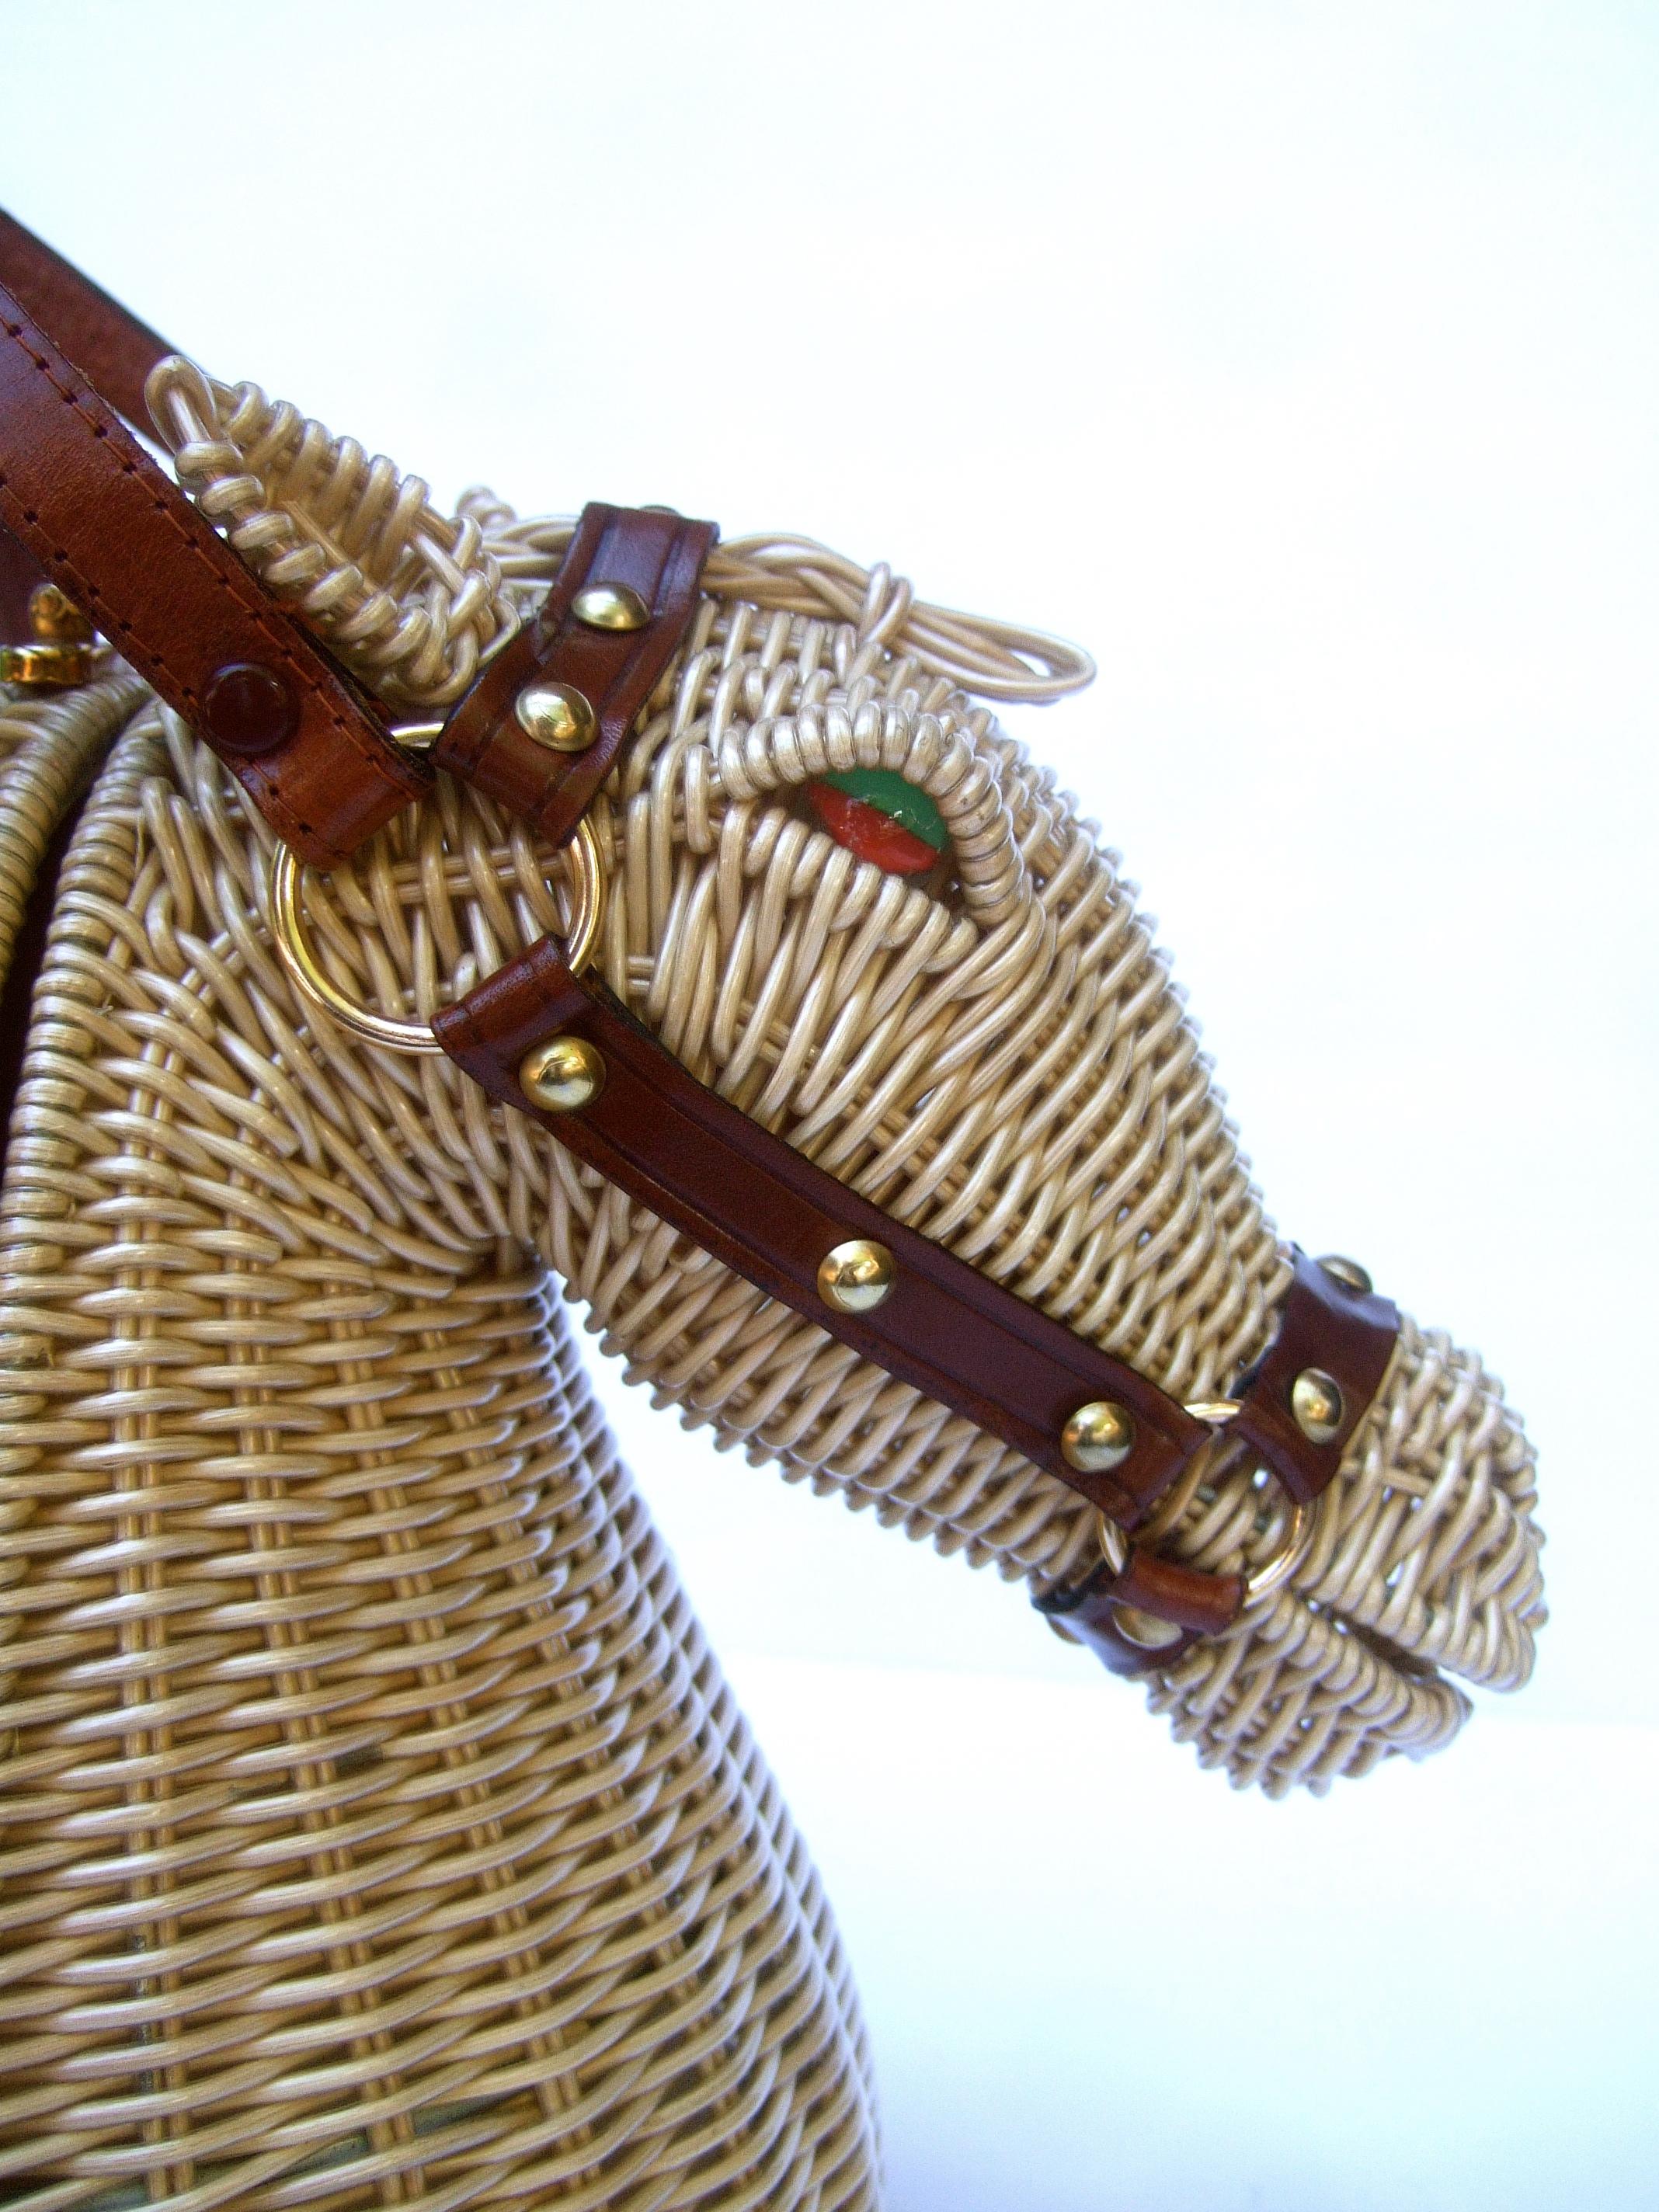 Extremely Rare Figural Wicker Artisan Horse Design Handbag c 1970 7